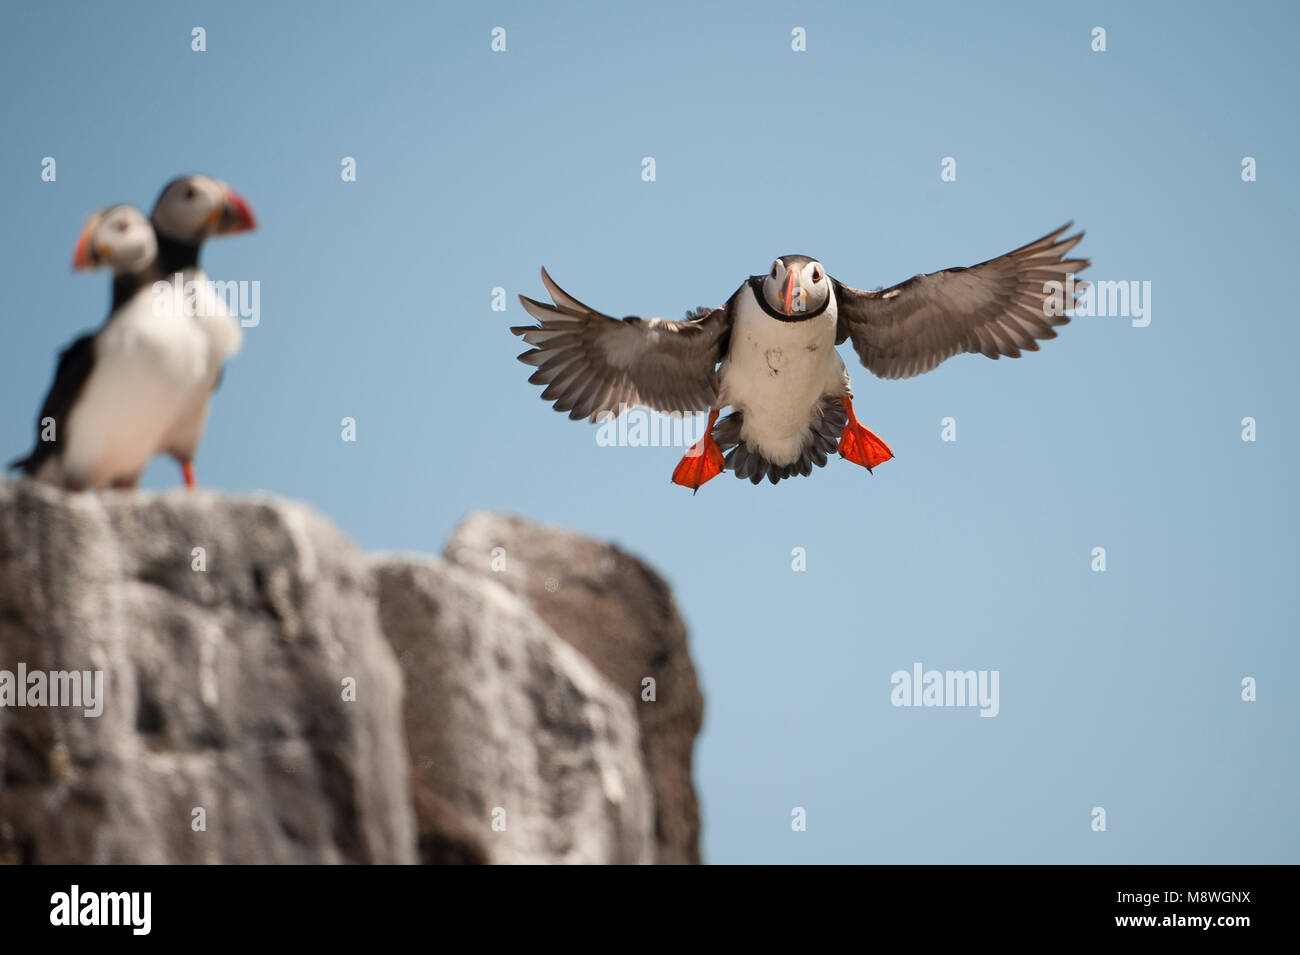 Papegaaiduiker vliegend; Atlantic Puffin flying Stock Photo